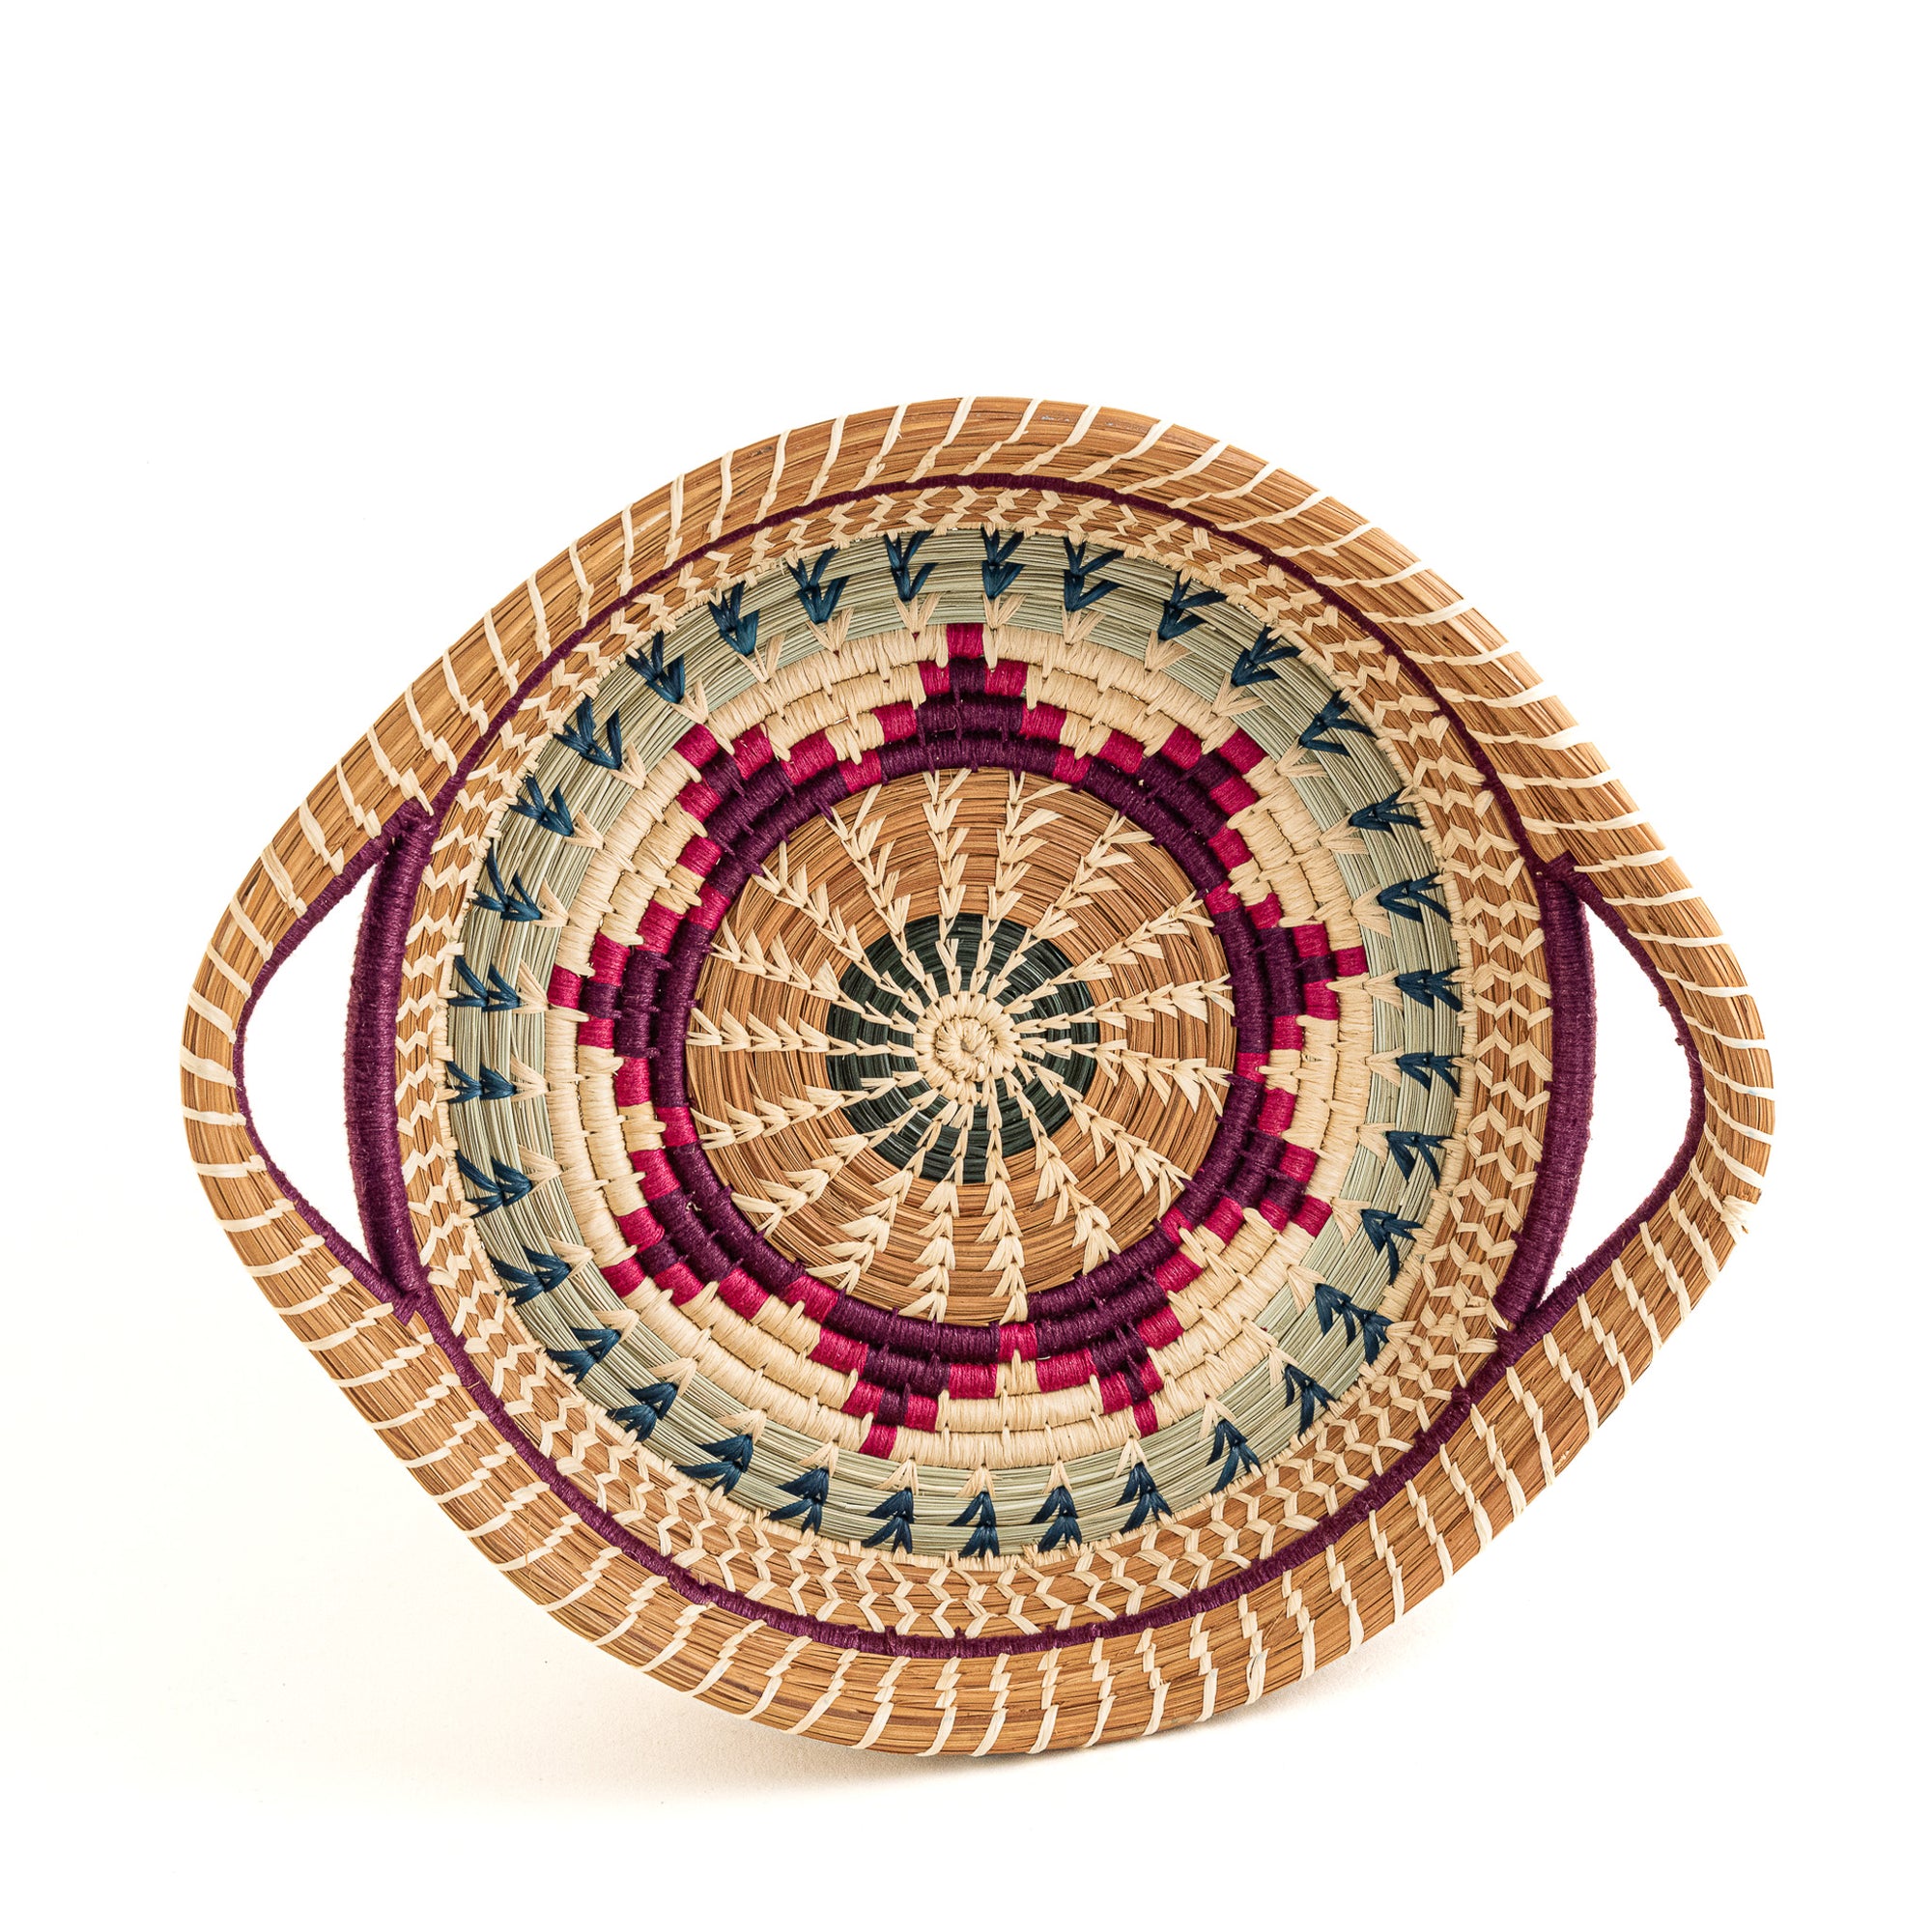 Guatemalan pine needle basket with handles in green